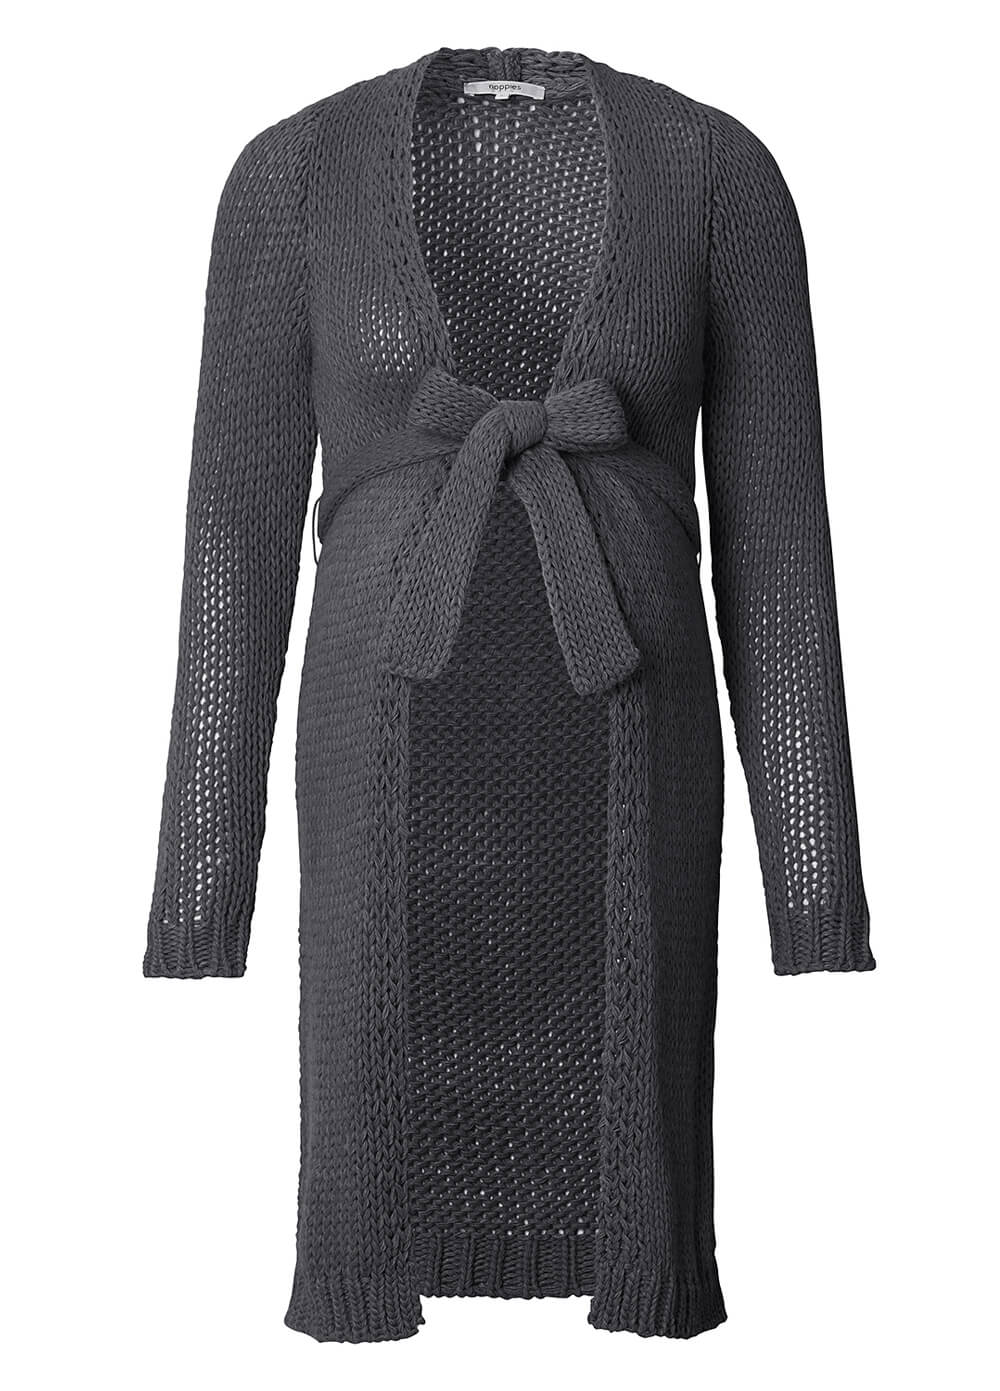 Hazel Maternity Knit Long Cardigan in Grey by Noppies